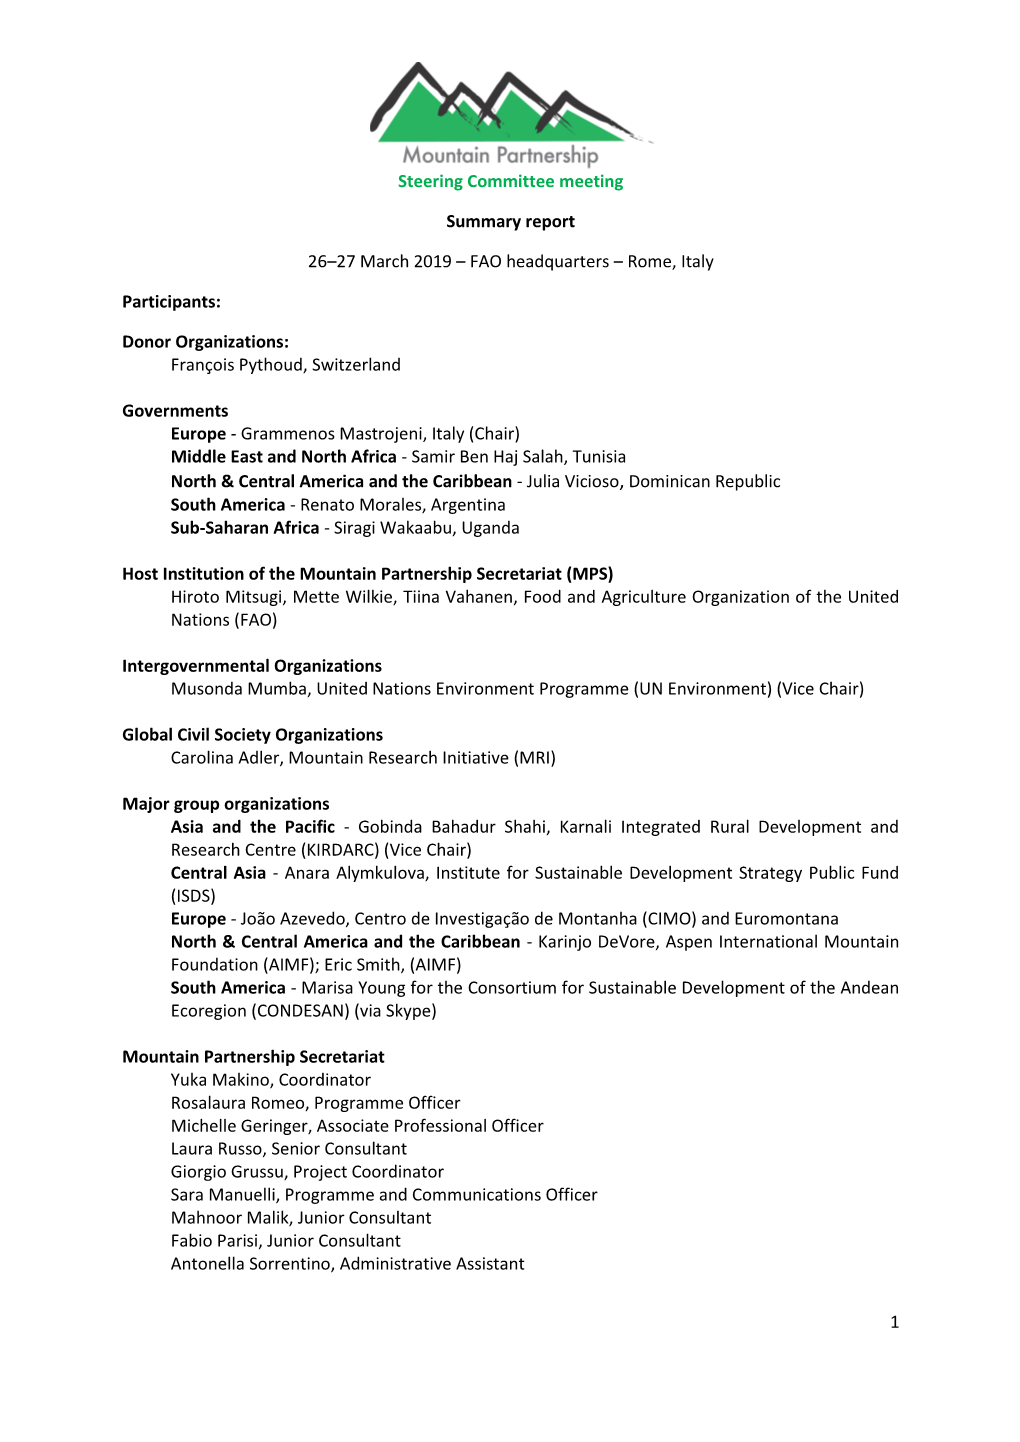 Mountain Partnership Steering Committee Summary Report